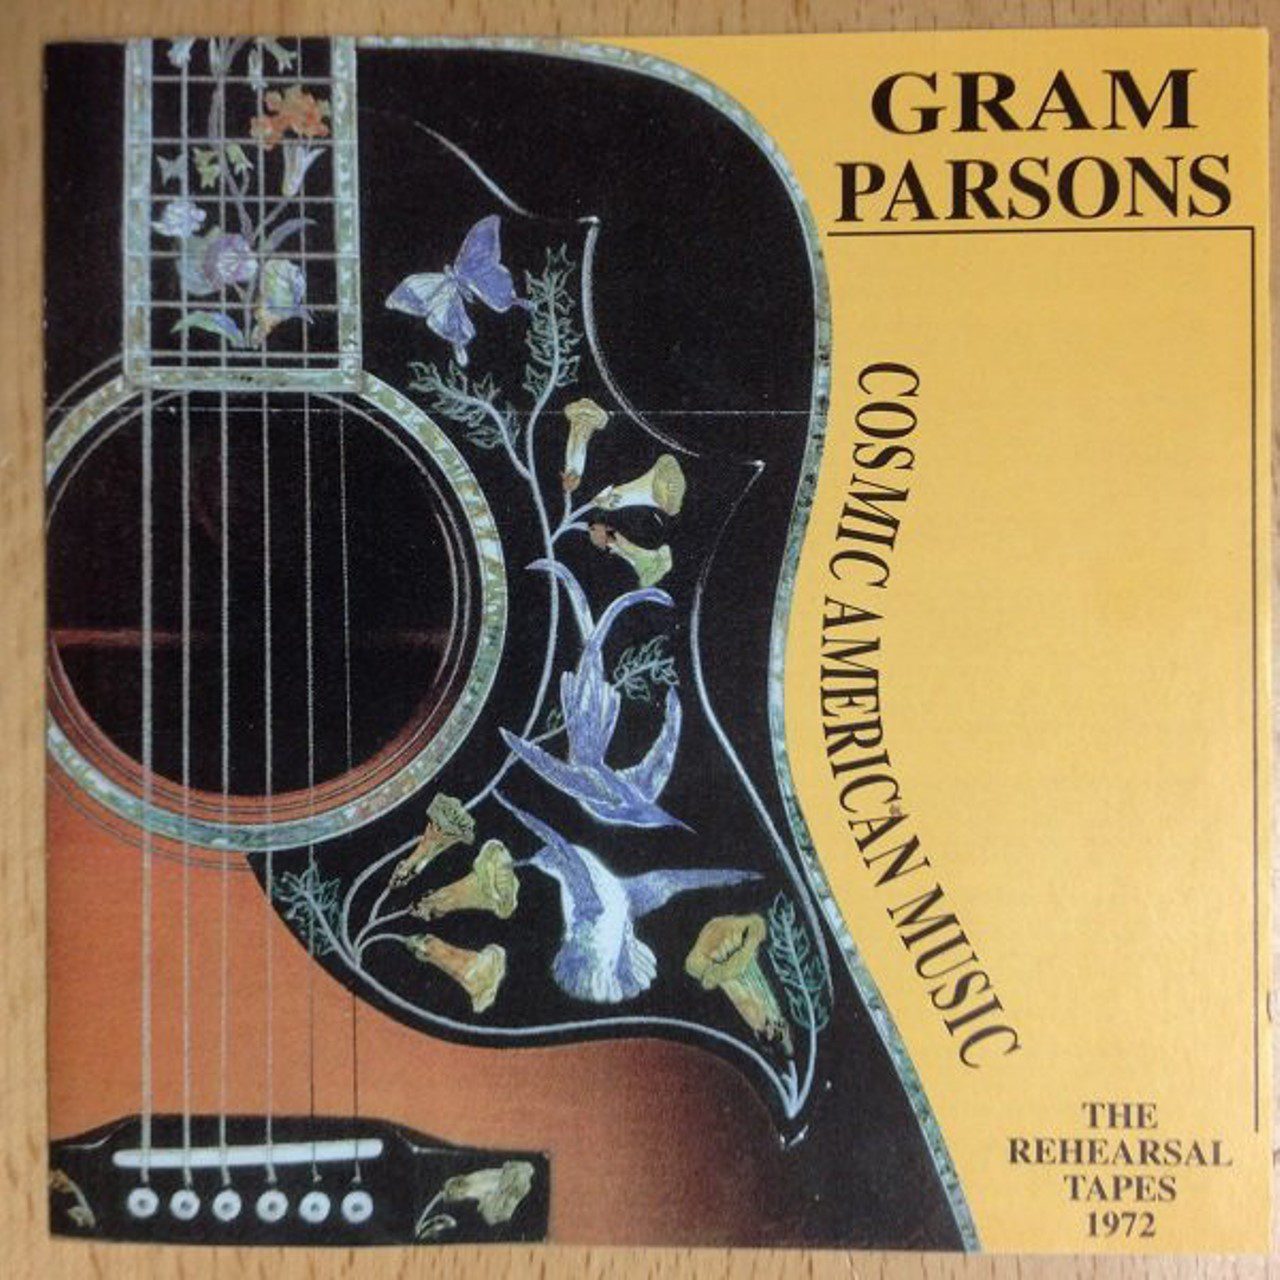 Gram Parsons – Cosmic American Music – Rehearsal Tapes 1972 cover album